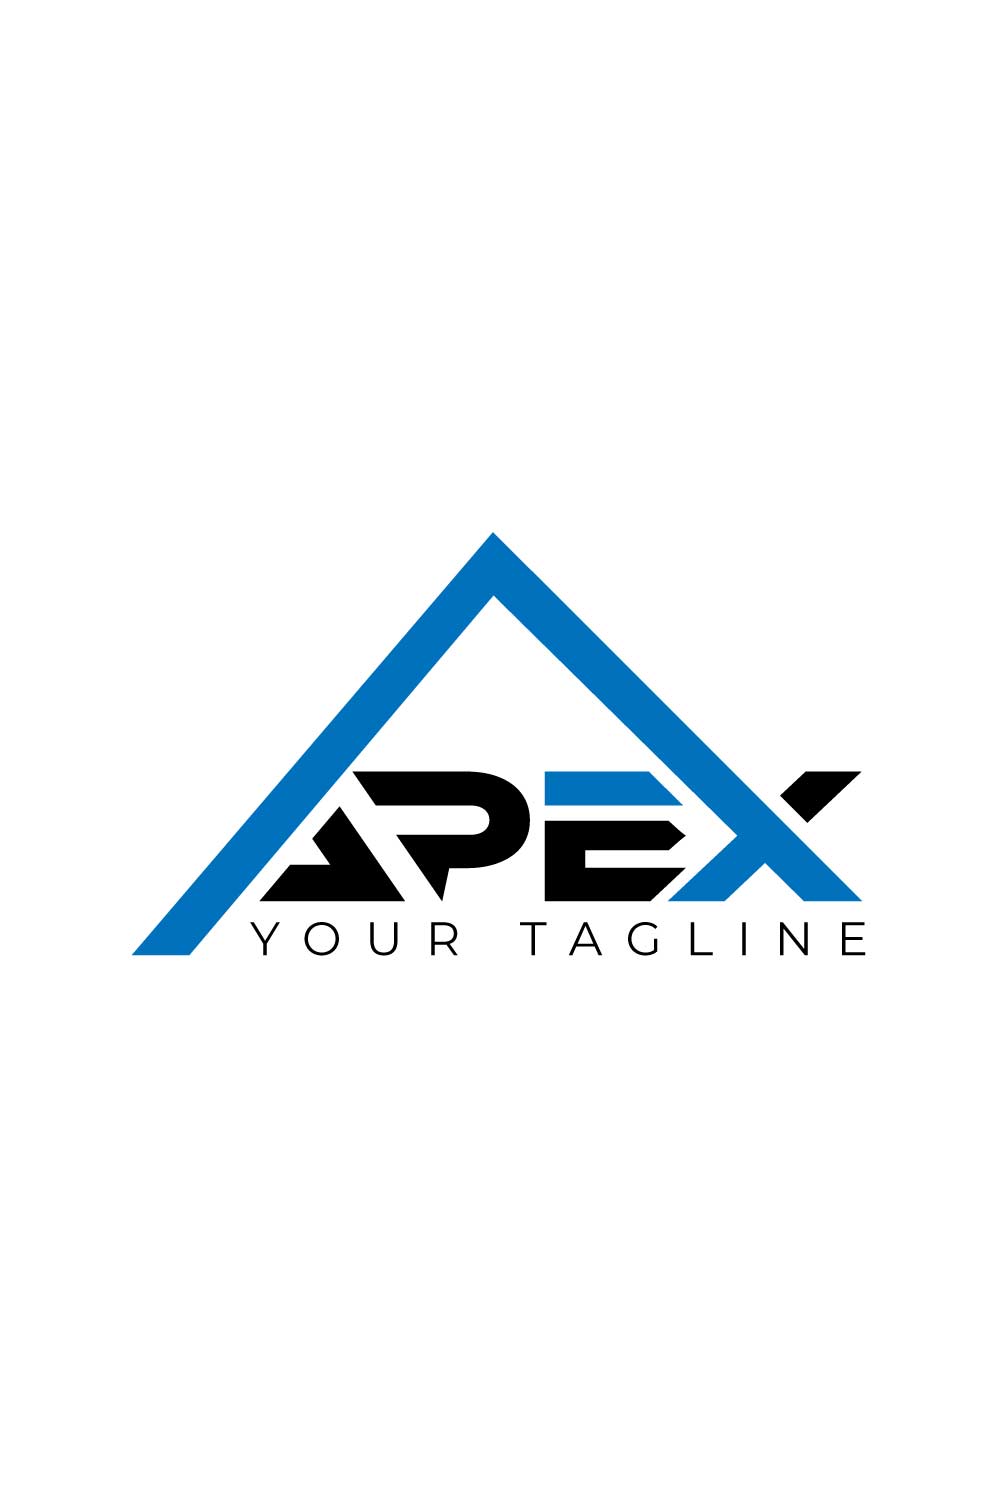 Apex triangle creative mountain shape logo pinterest preview image.